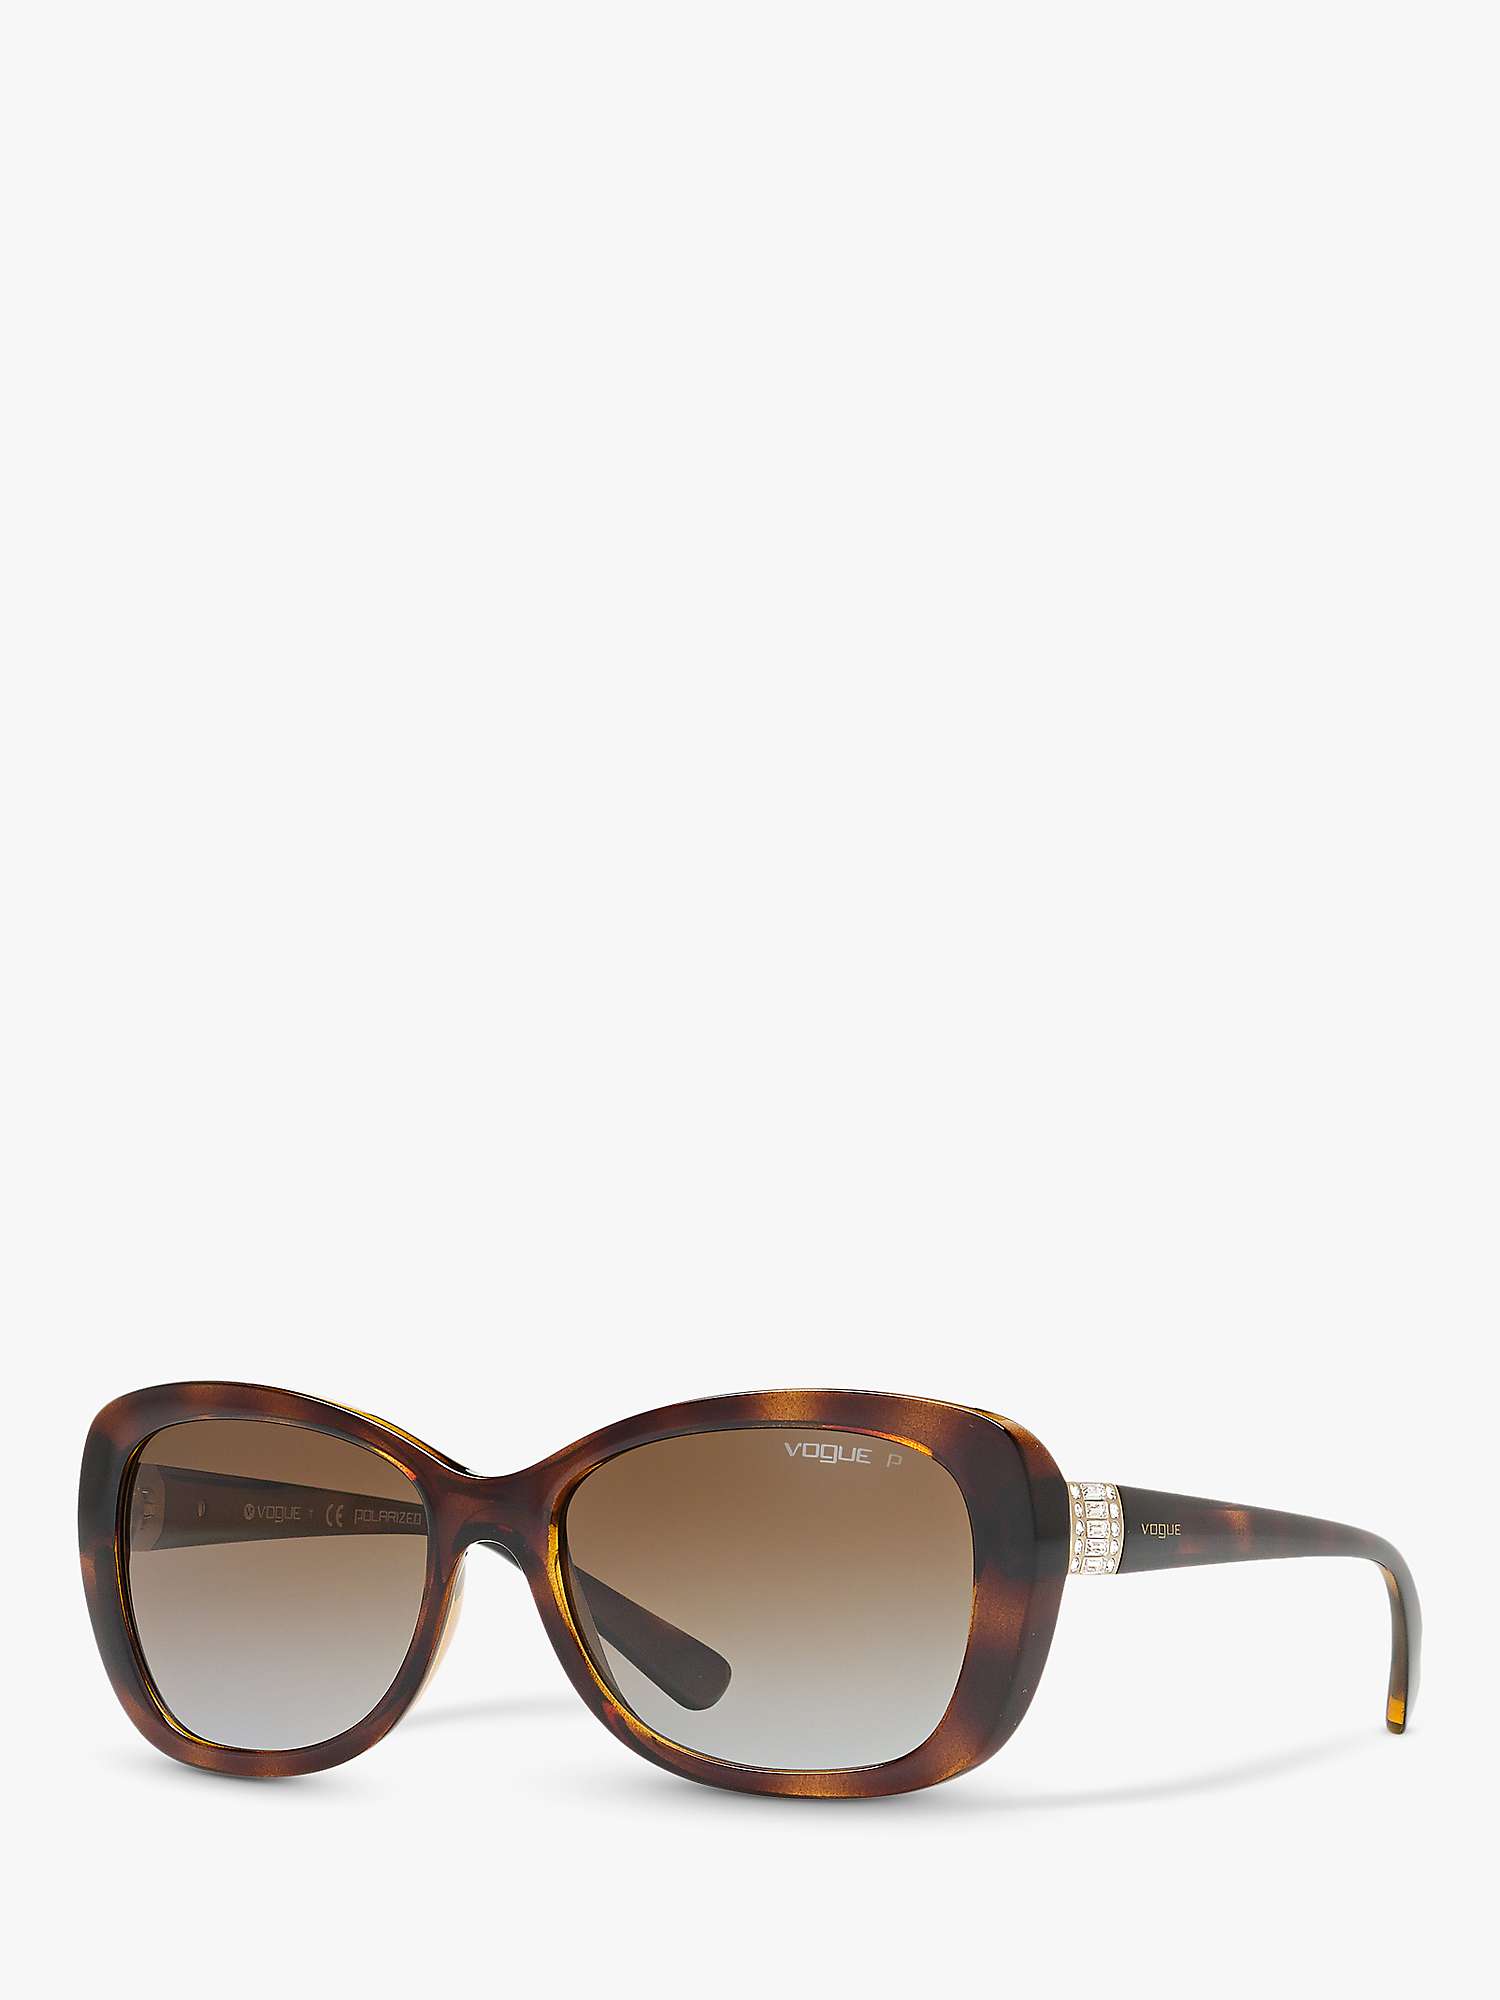 Buy Vogue VO2943SB Women's Polarised Butterfly Sunglasses, Dark Tortoise/Brown Gradient Online at johnlewis.com